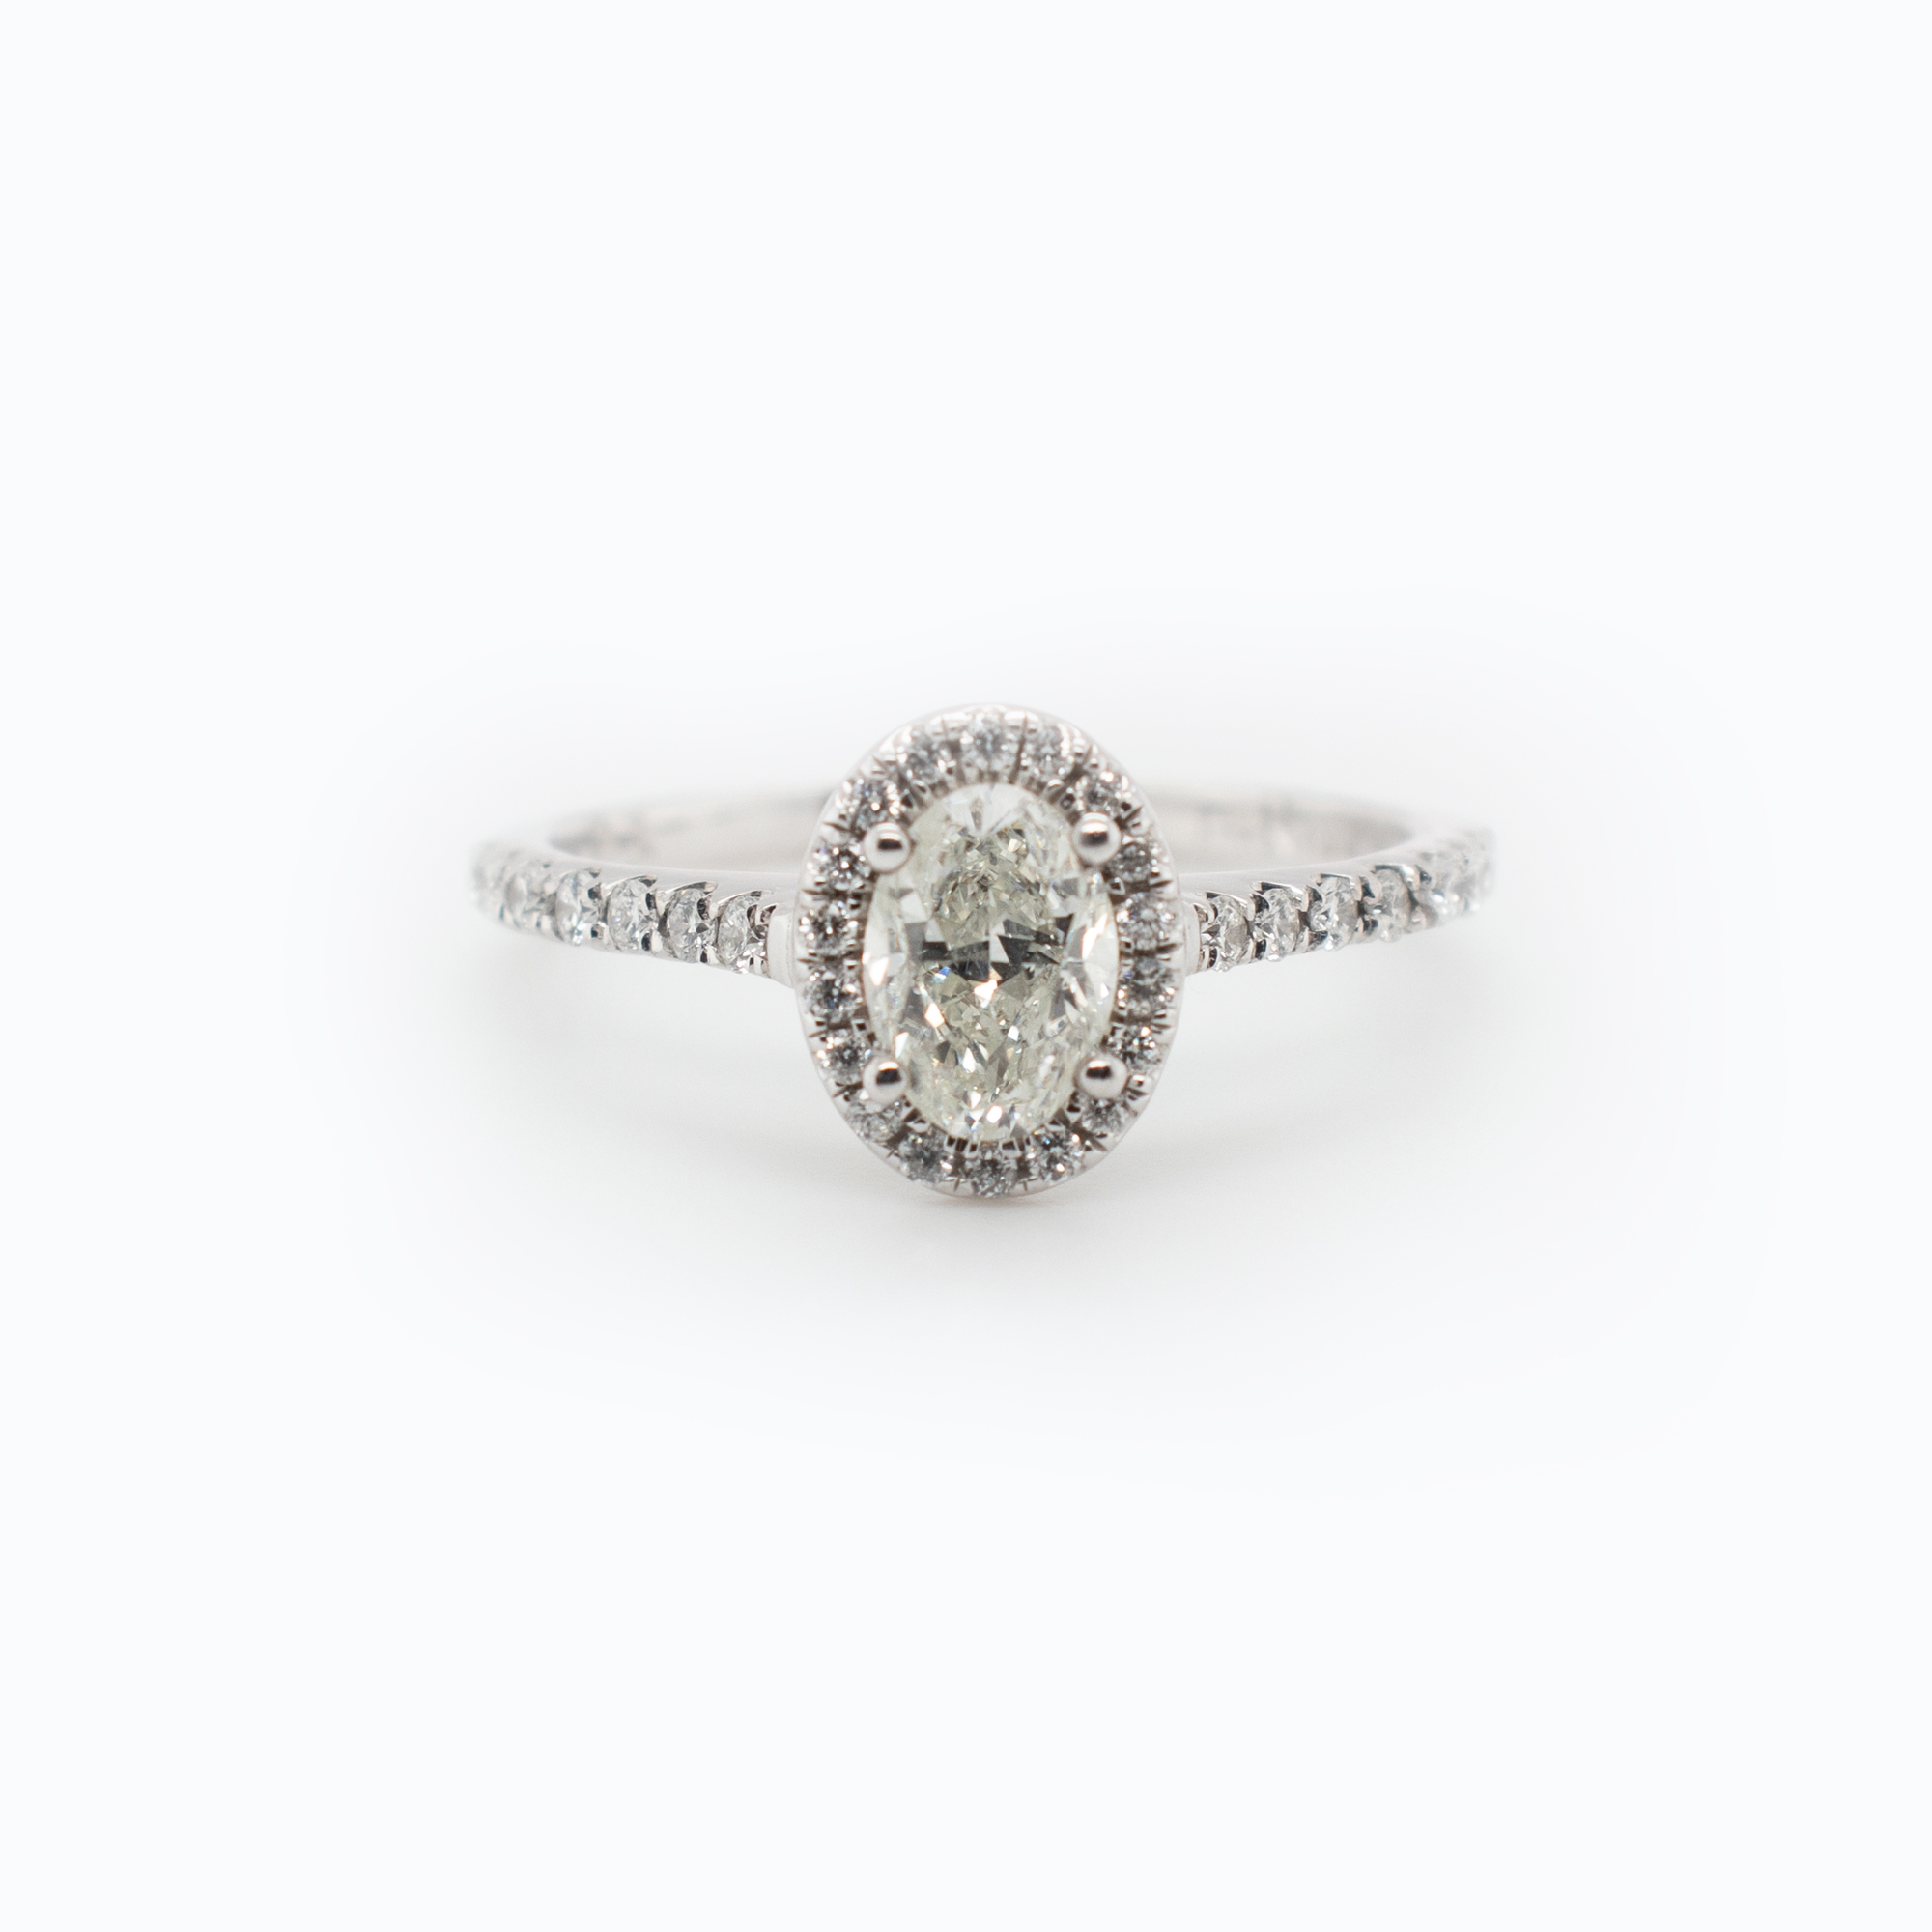 Oval Diamond Halo Engagement Ring, 14k White Gold